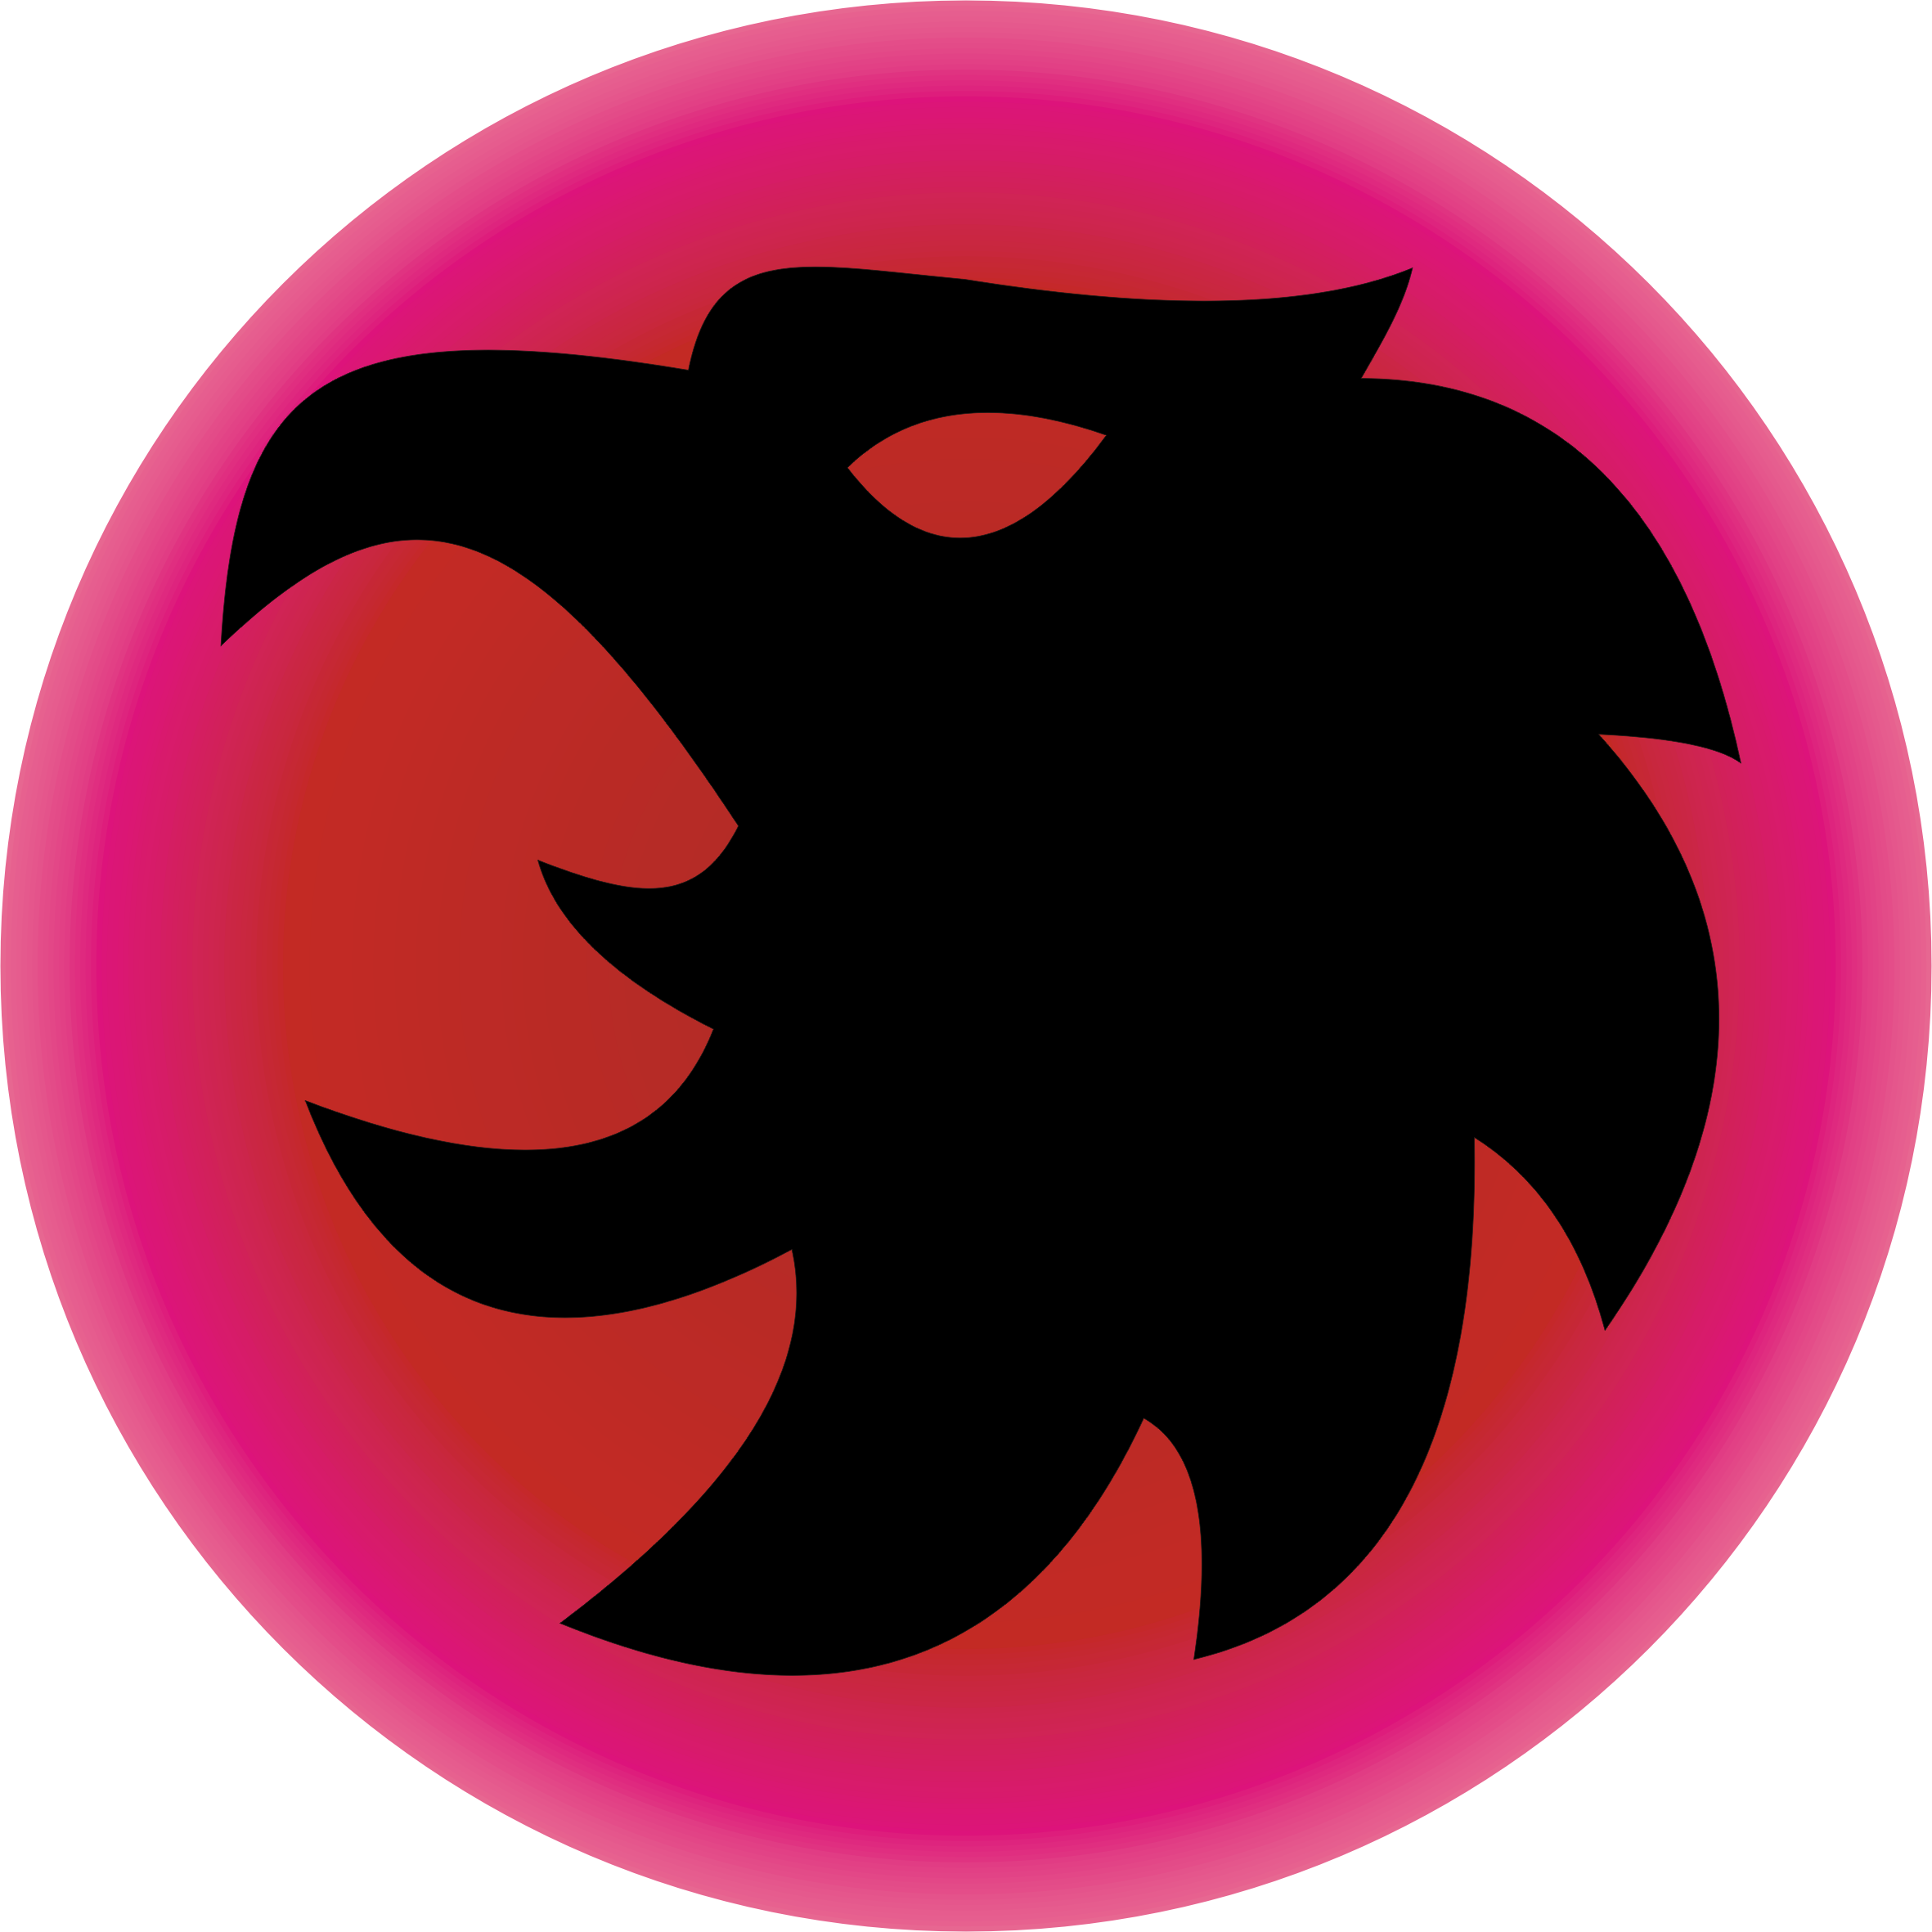 Hawkman logo